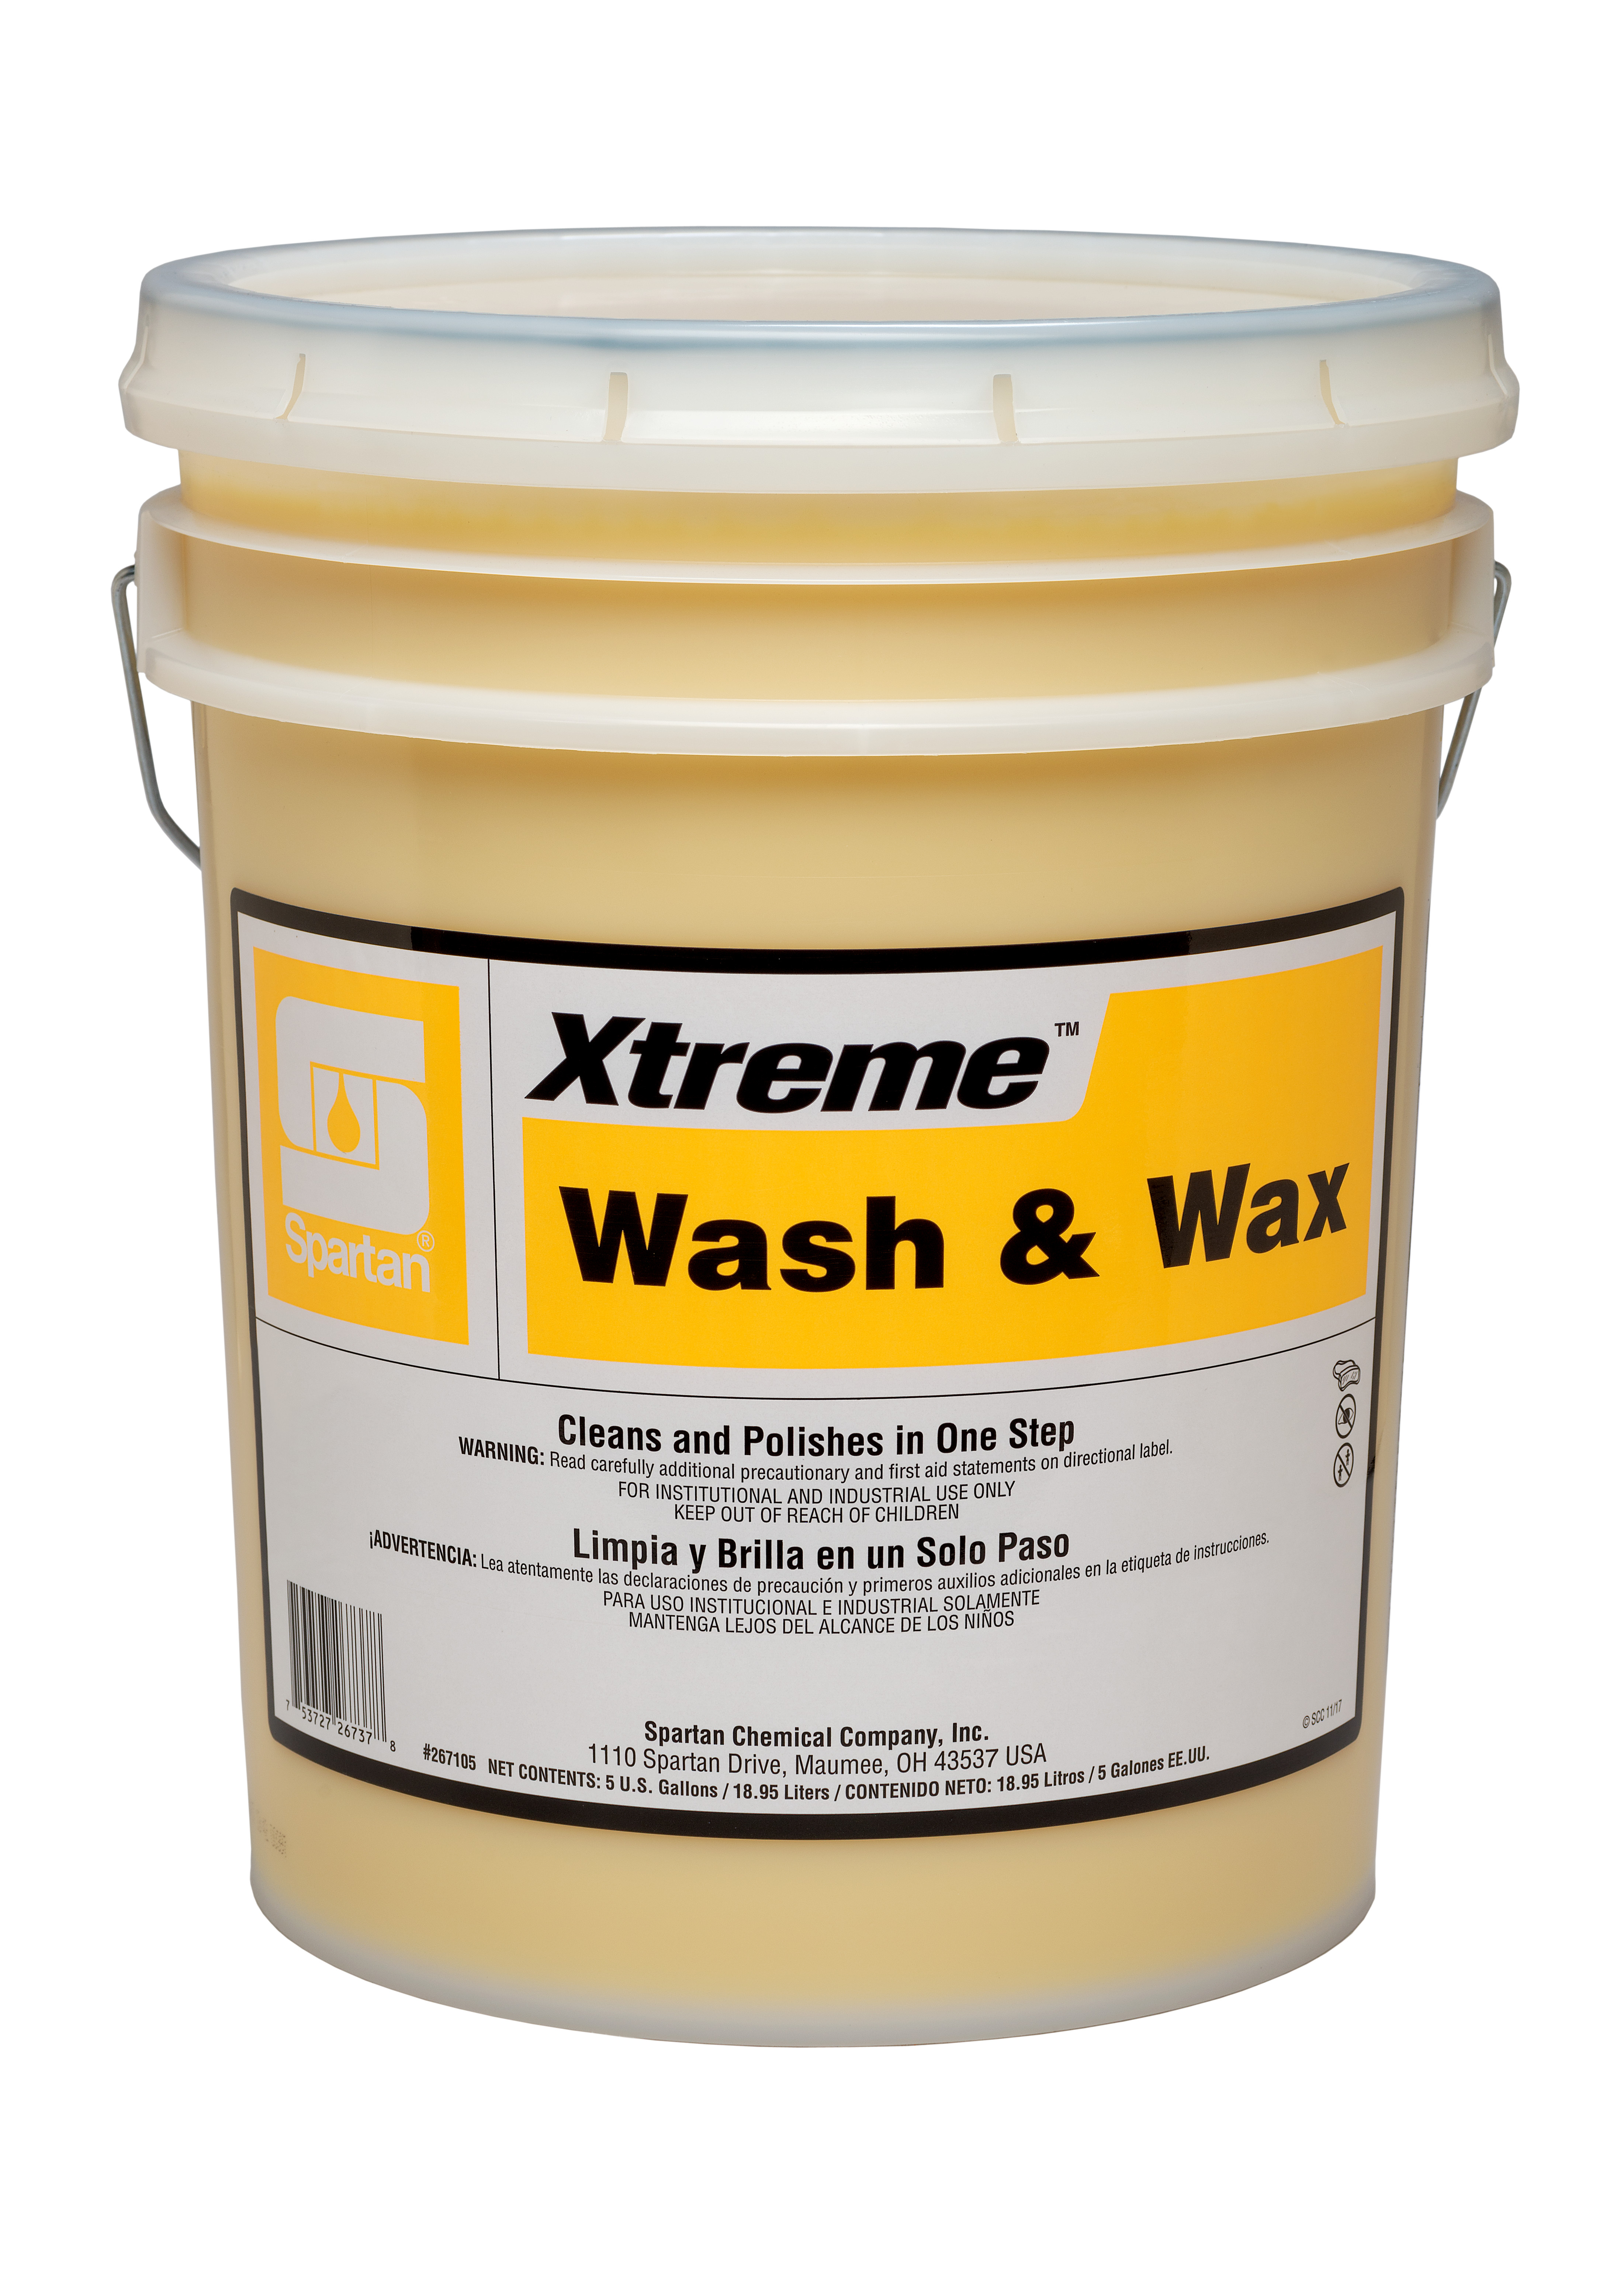 Spartan Chemical Company Xtreme Wash & Wax, 5 GAL PAIL